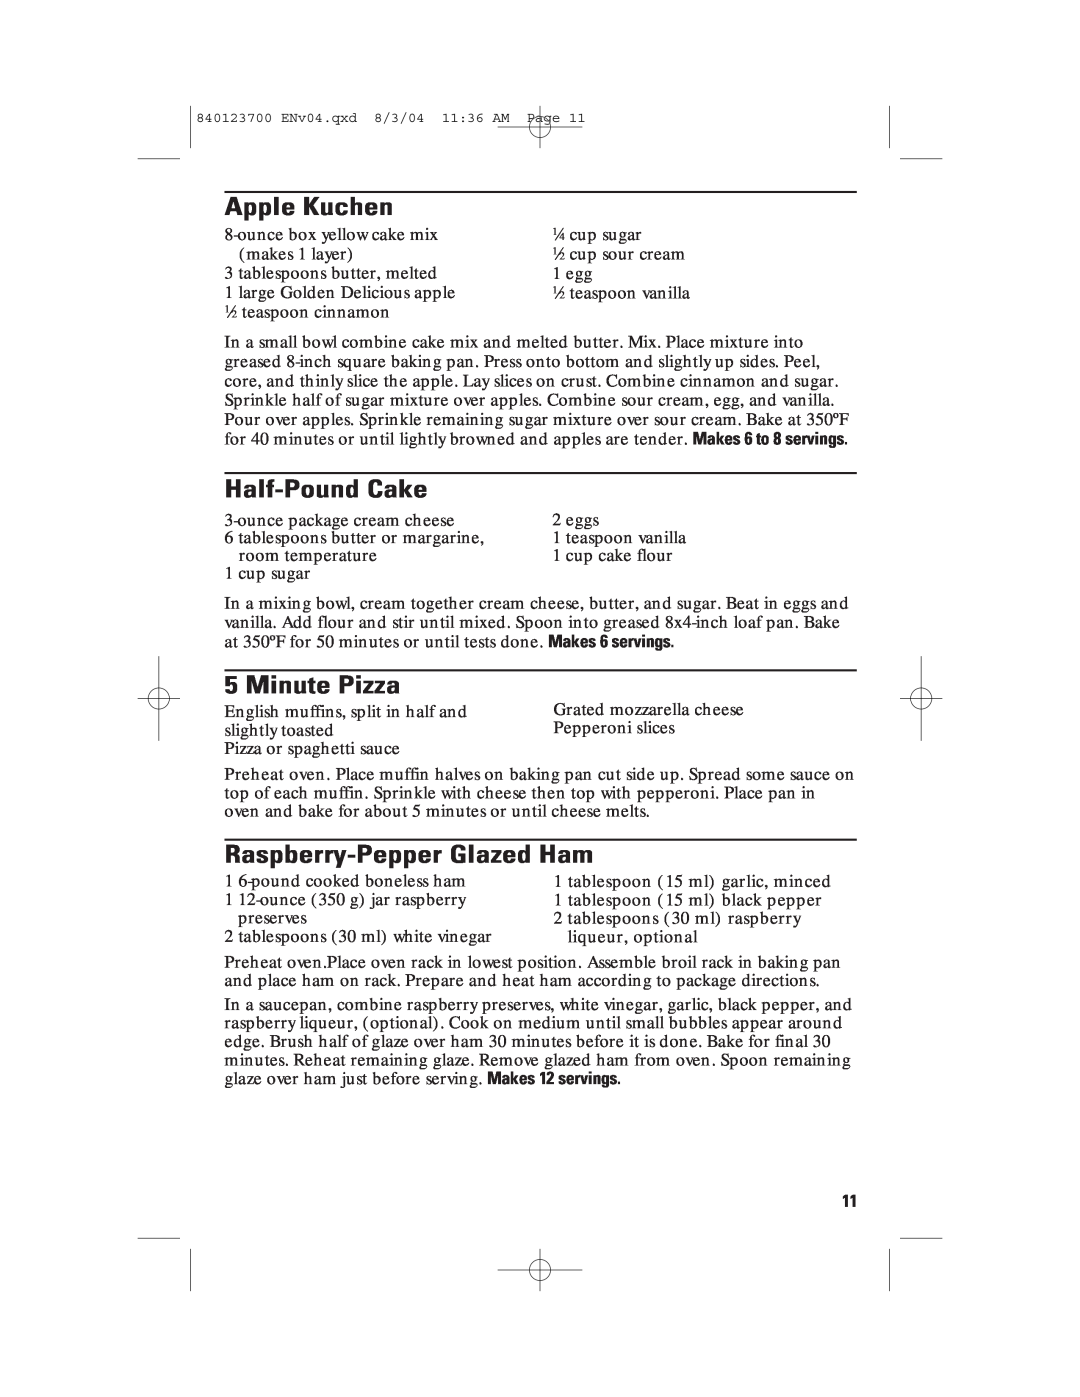 GE 168989, 840123700 manual Apple Kuchen, Half-PoundCake, Minute Pizza, Raspberry-PepperGlazed Ham 